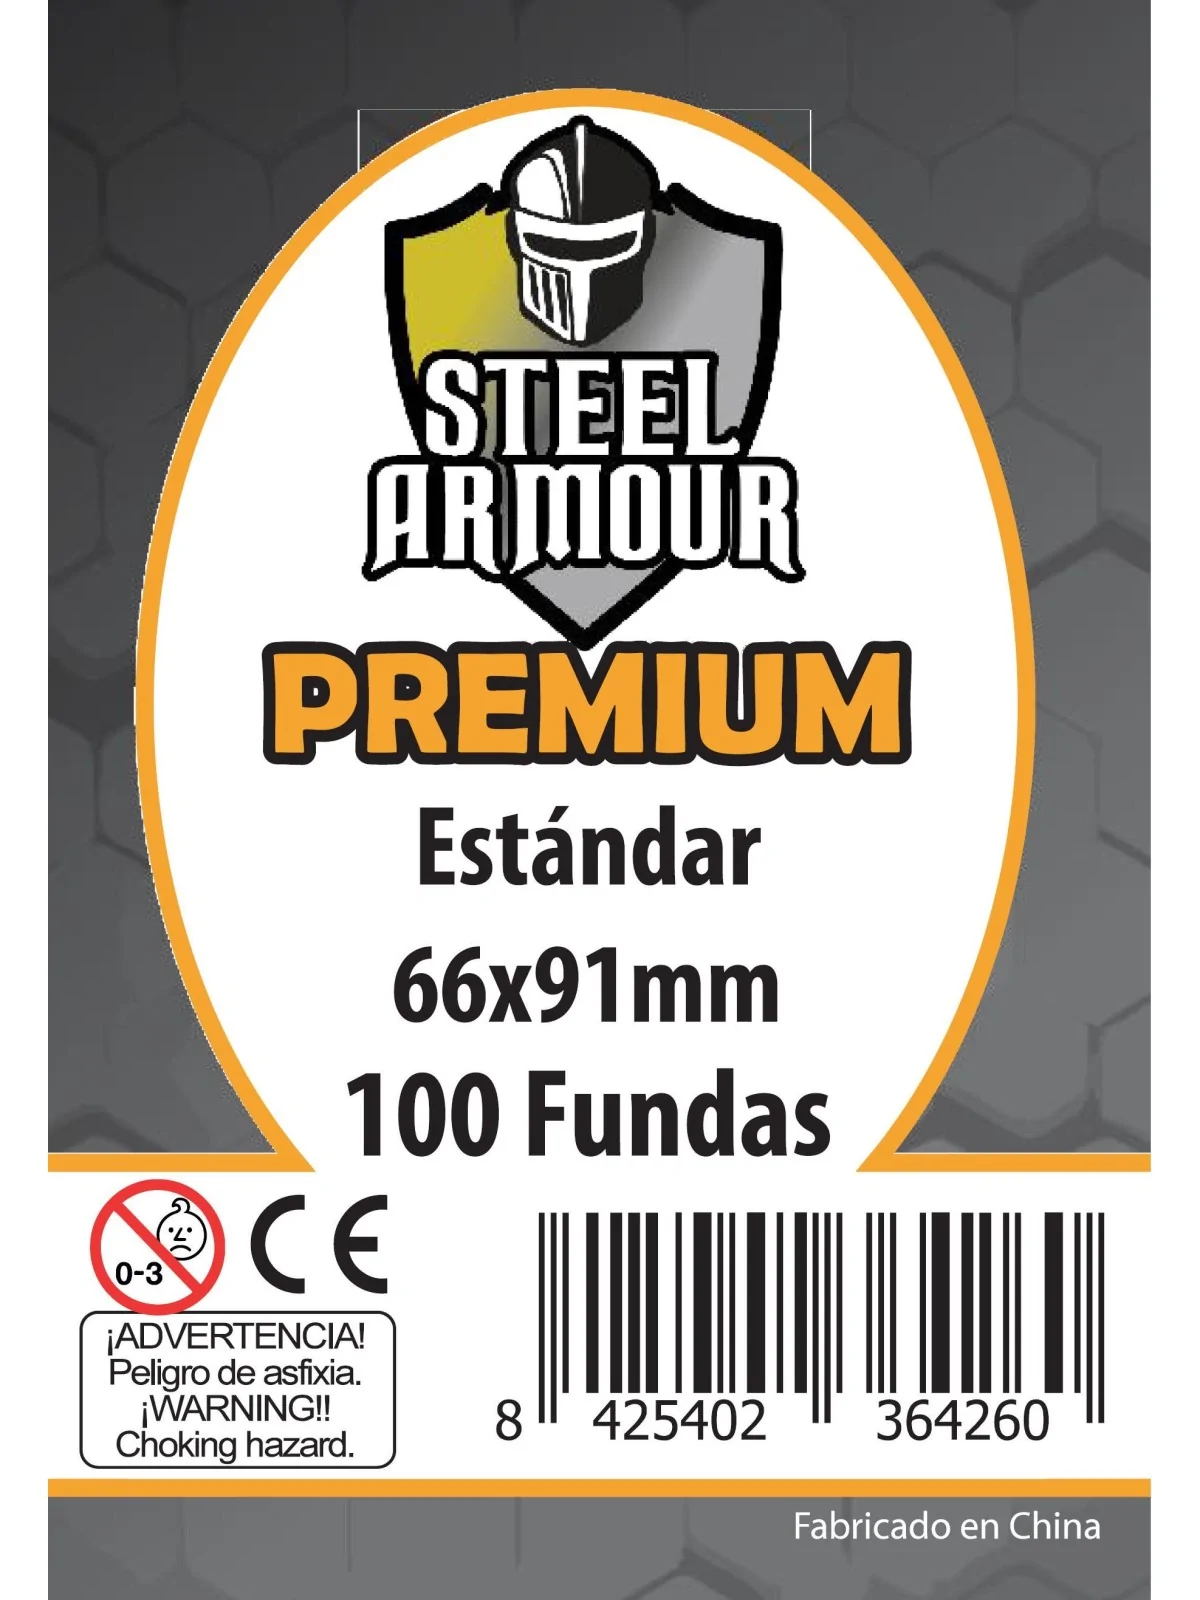 Comprar Steel Armour Estándar Premium (Pack of 100) (66x91mm) barato a